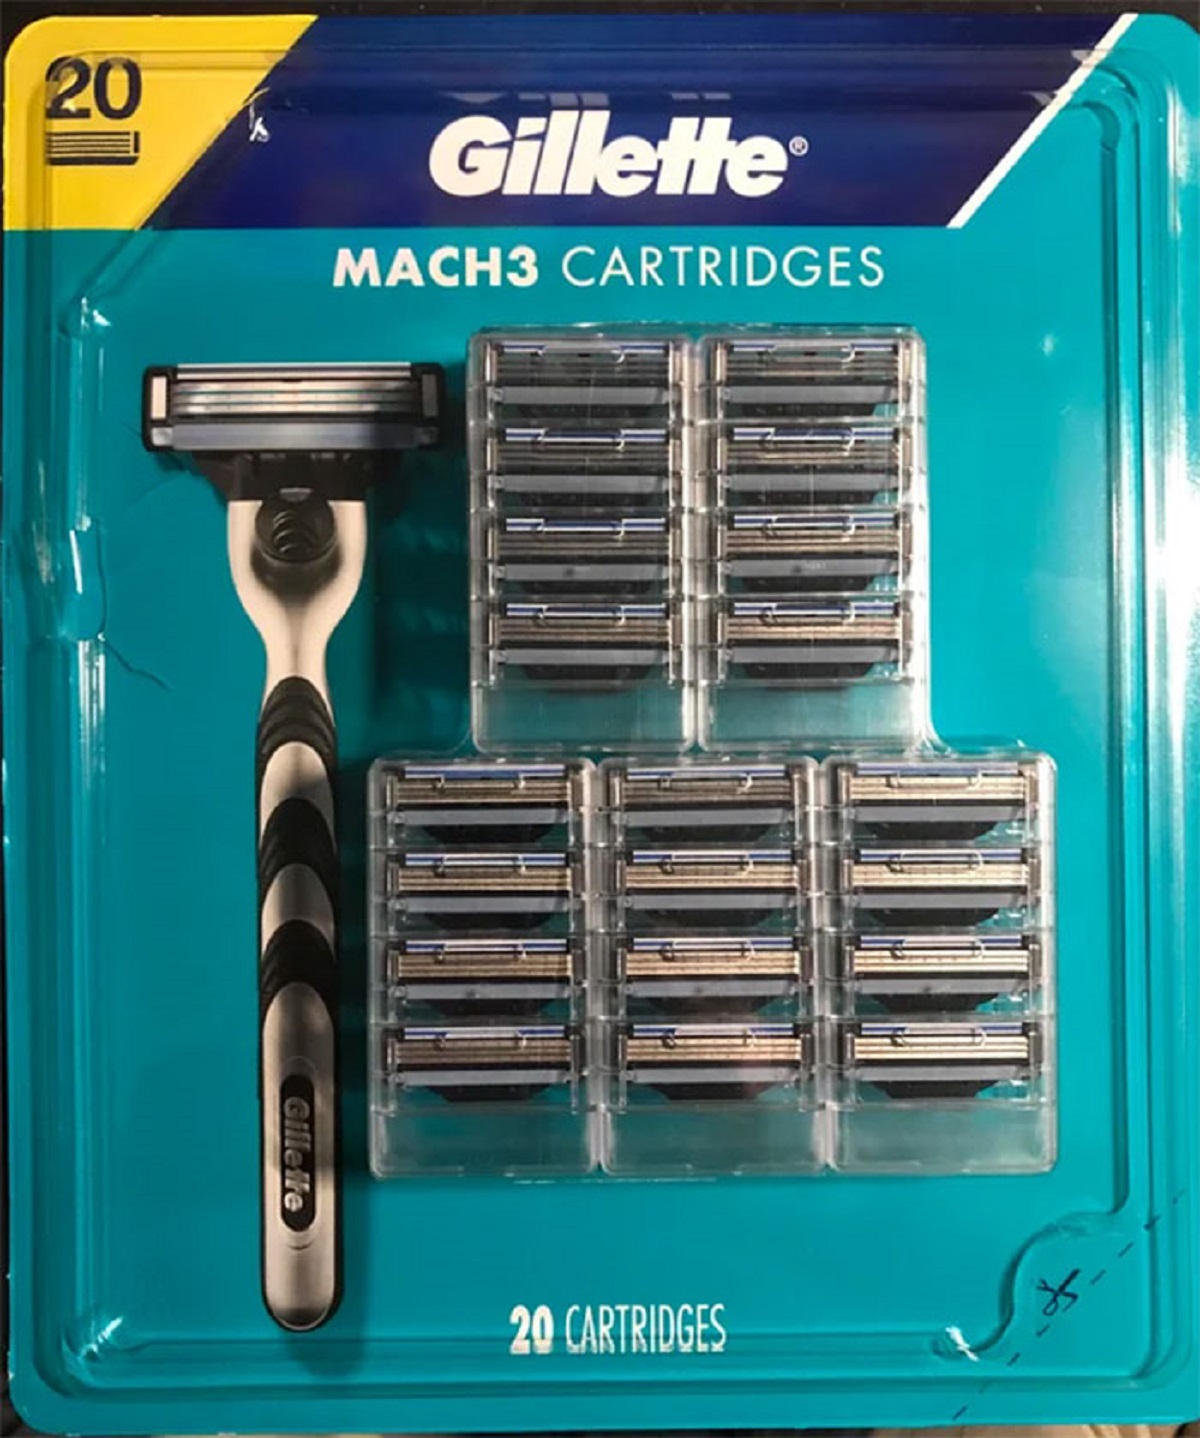 gillette cartridge pack - 20 Gillette MACH3 Cartridges Gillette 20 Cartridges